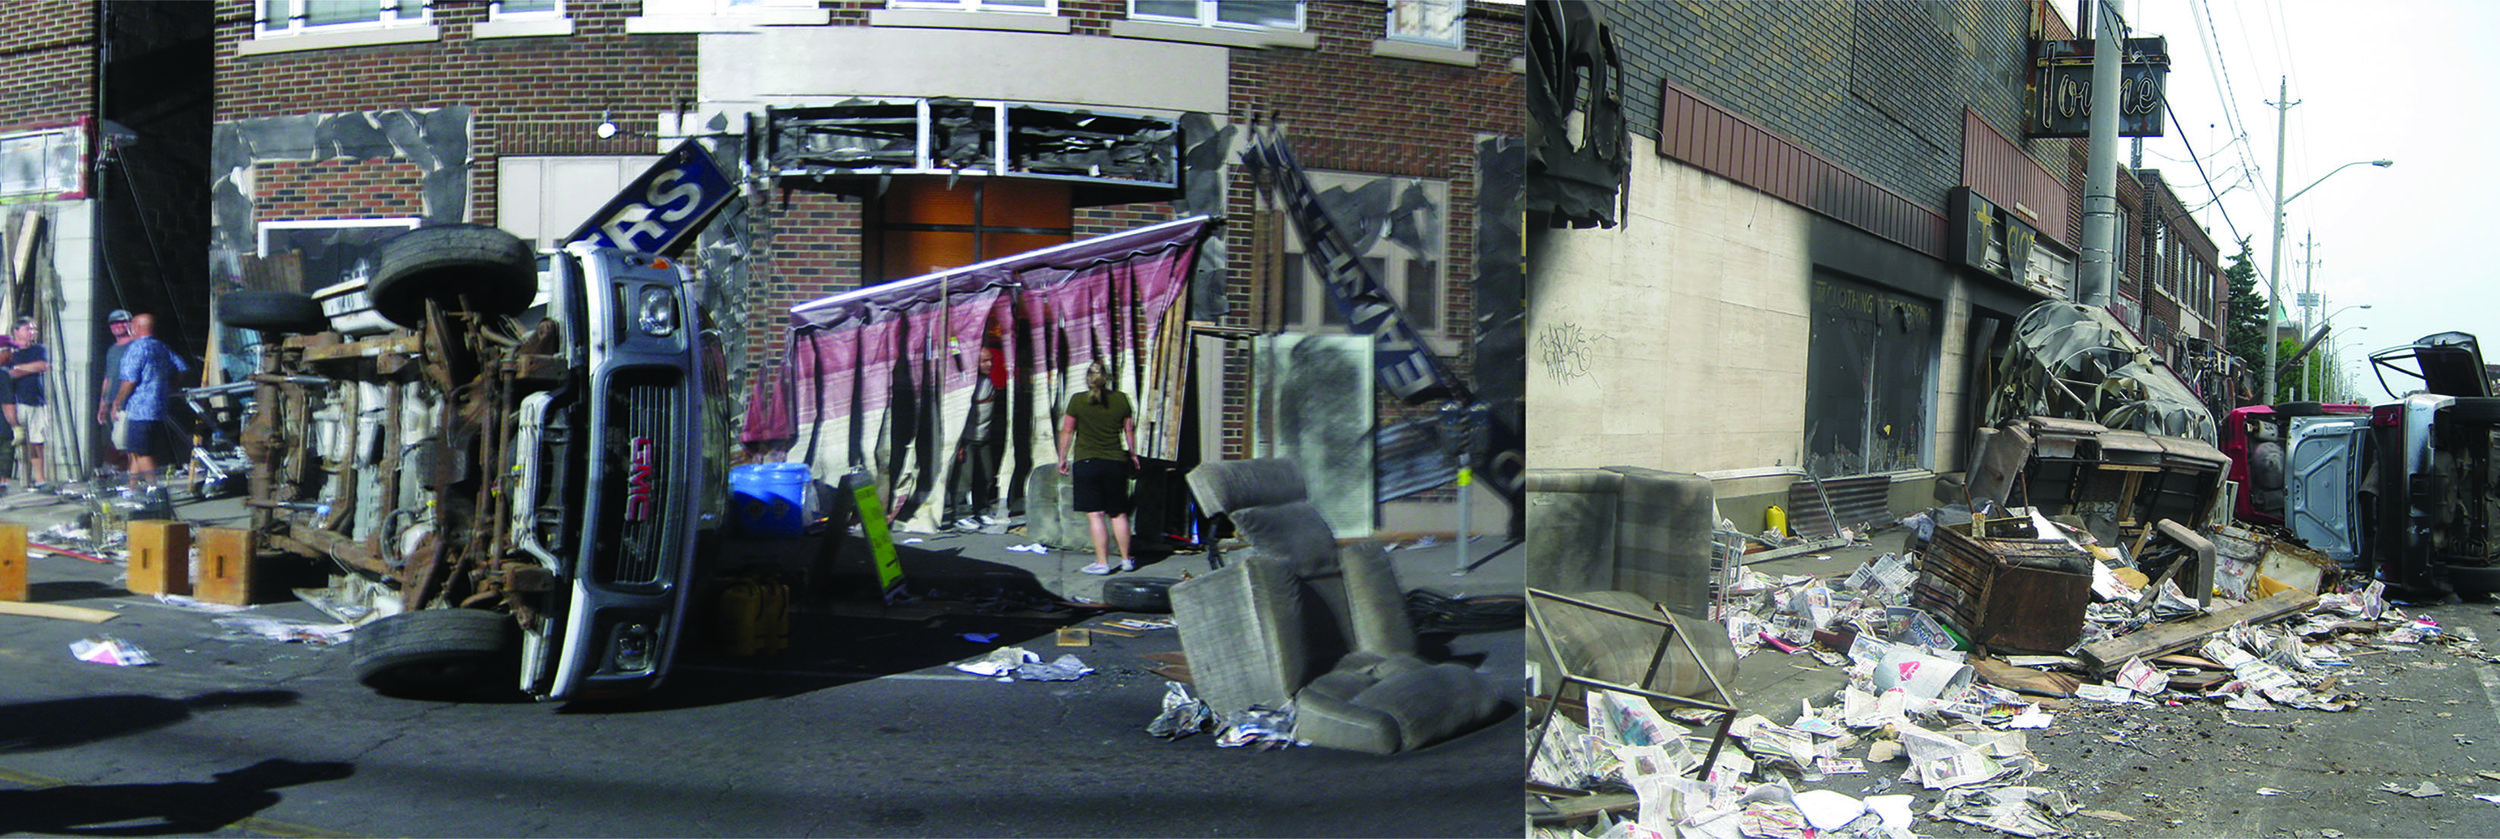 street destruction samples .jpg